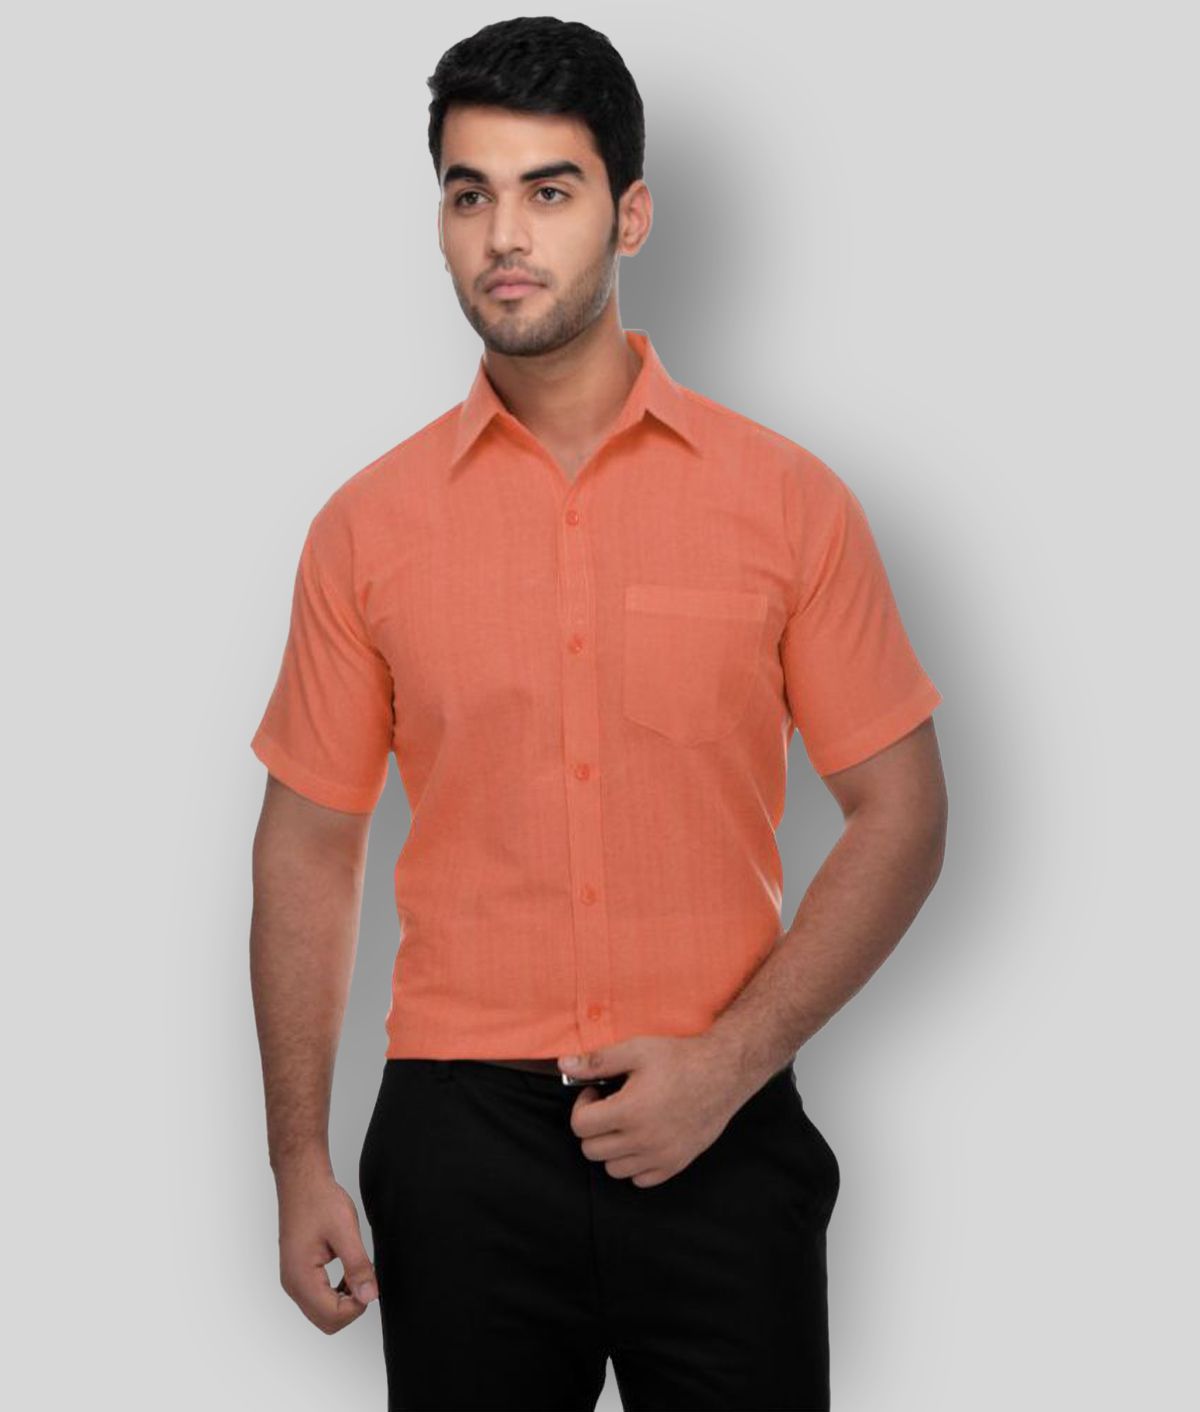     			DESHBANDHU DBK - Orange Cotton Regular Fit Men's Formal Shirt (Pack of 1)